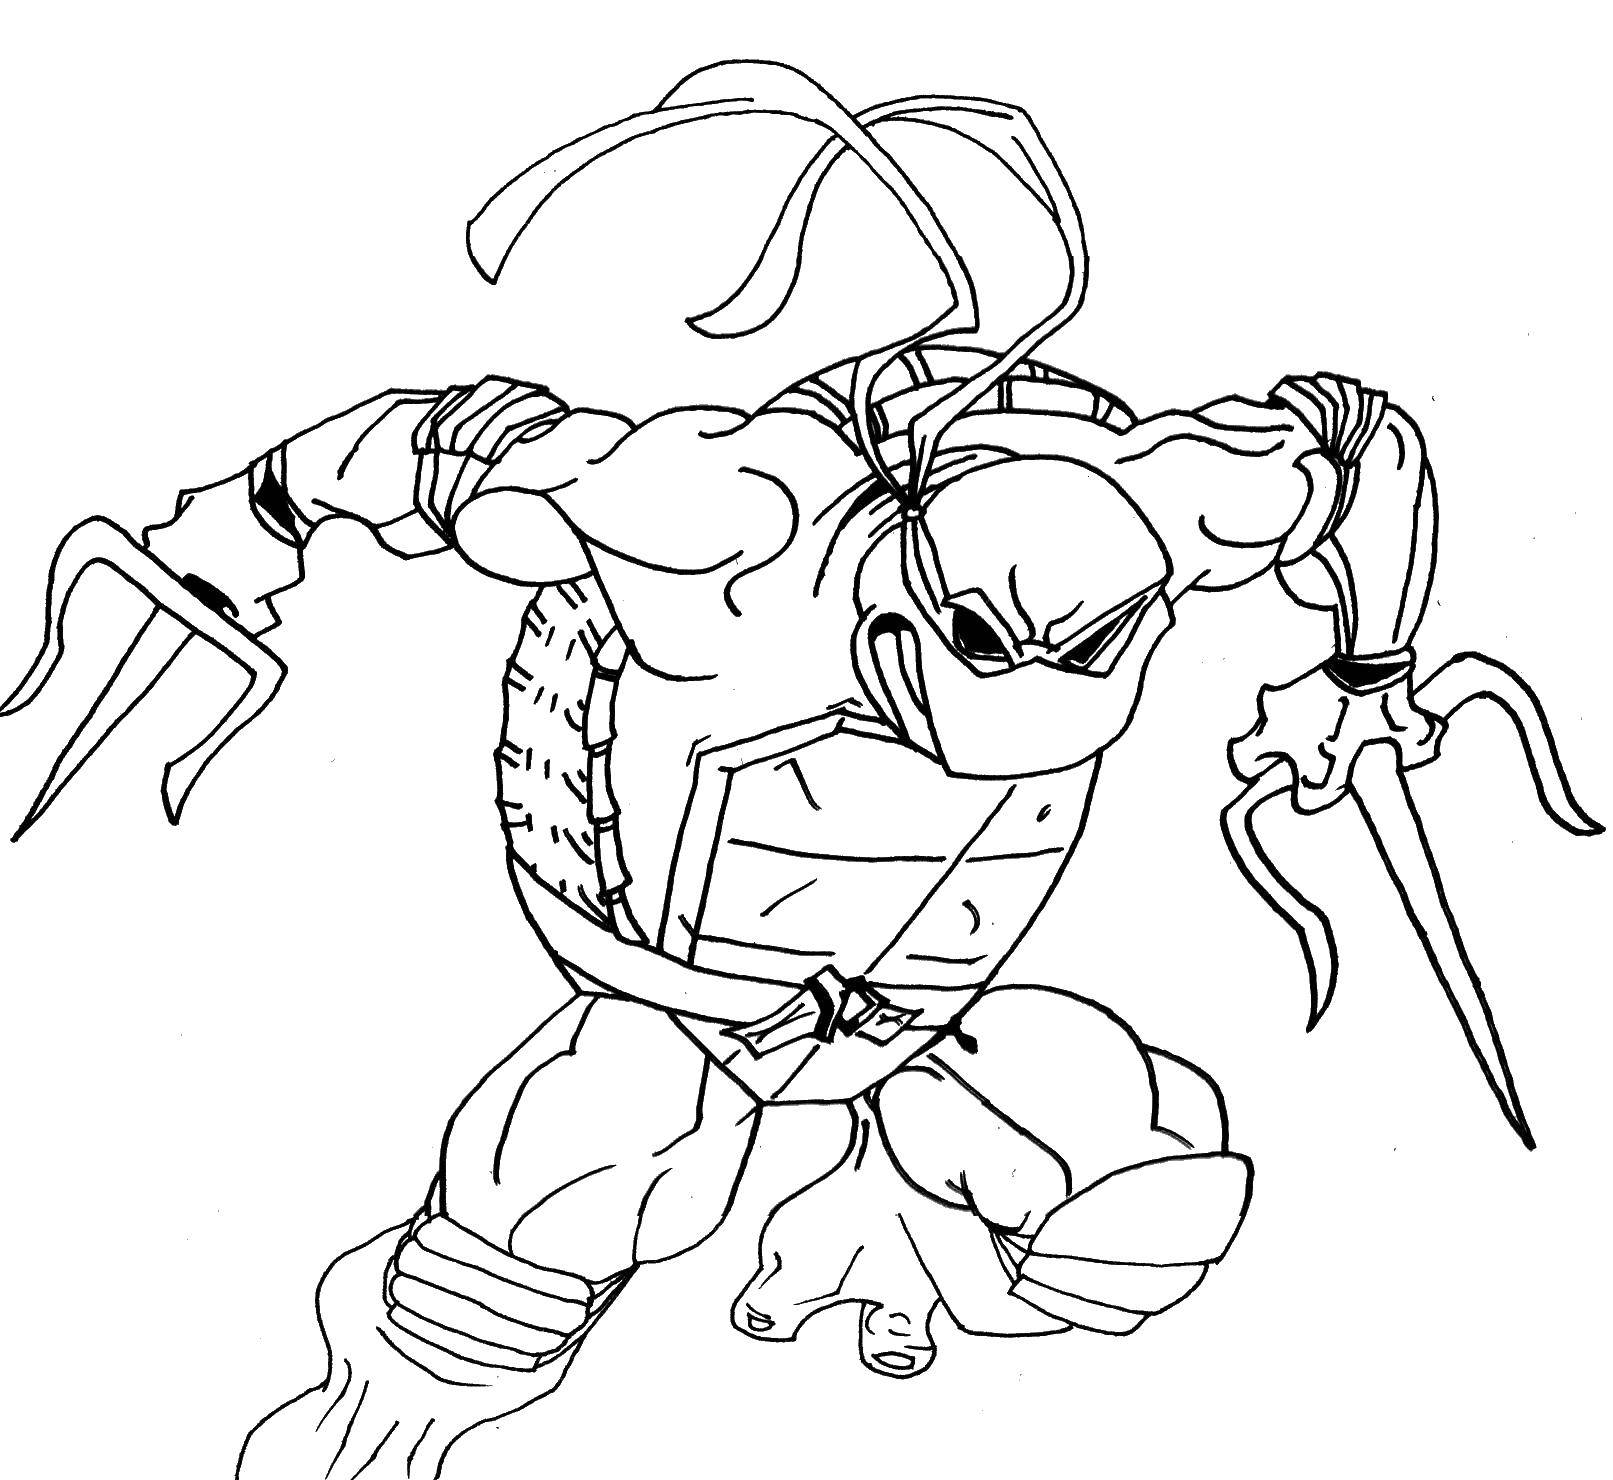 Coloring Raphael attacks with swords. Category teenage mutant ninja turtles. Tags:  Comics, Teenage Mutant Ninja Turtles.